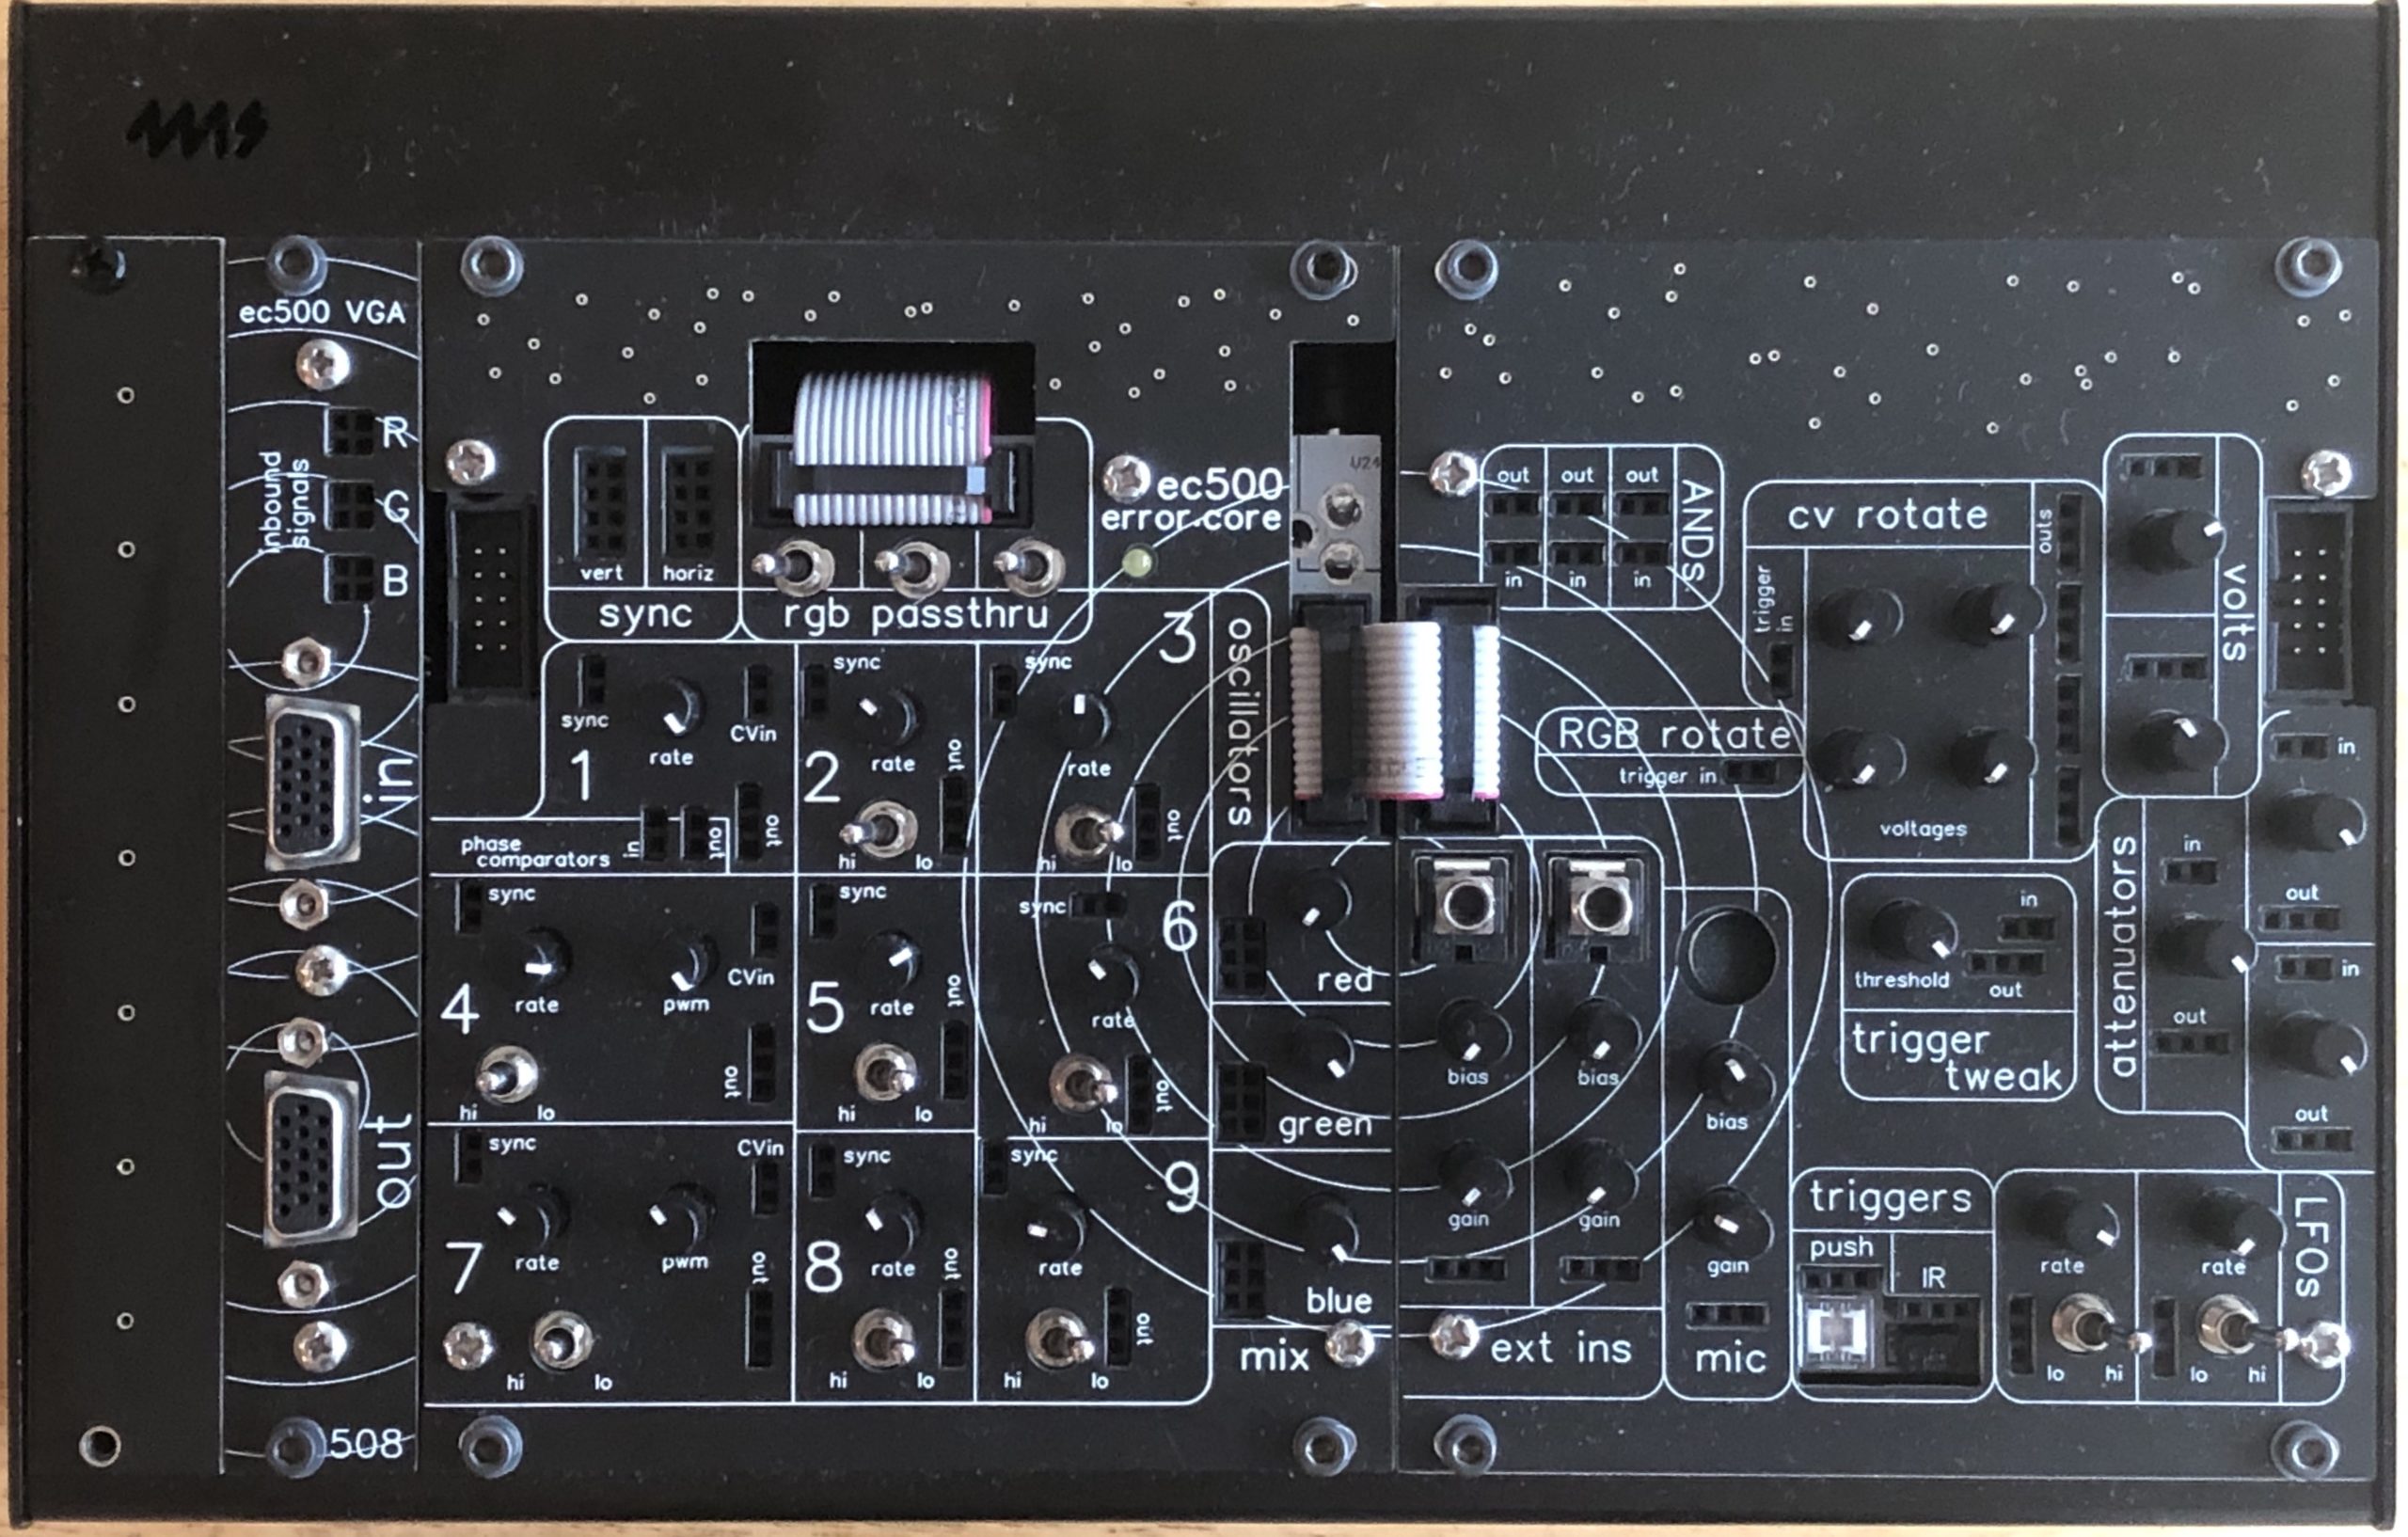 ec500 i/o expander 3U panel (black)